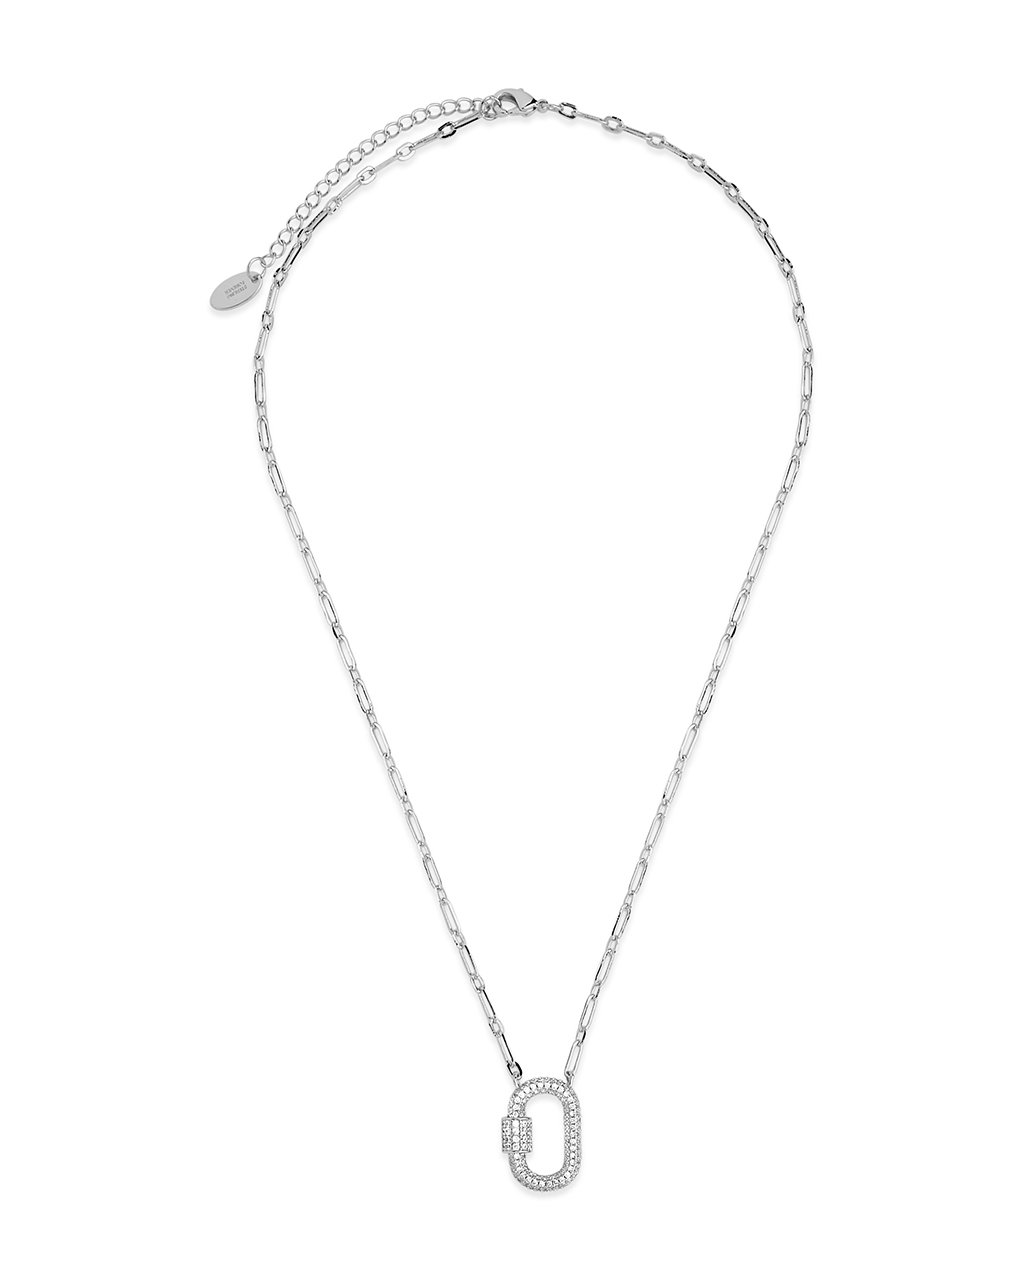 Pave CZ Carabiner Lock Necklace Necklace Sterling Forever